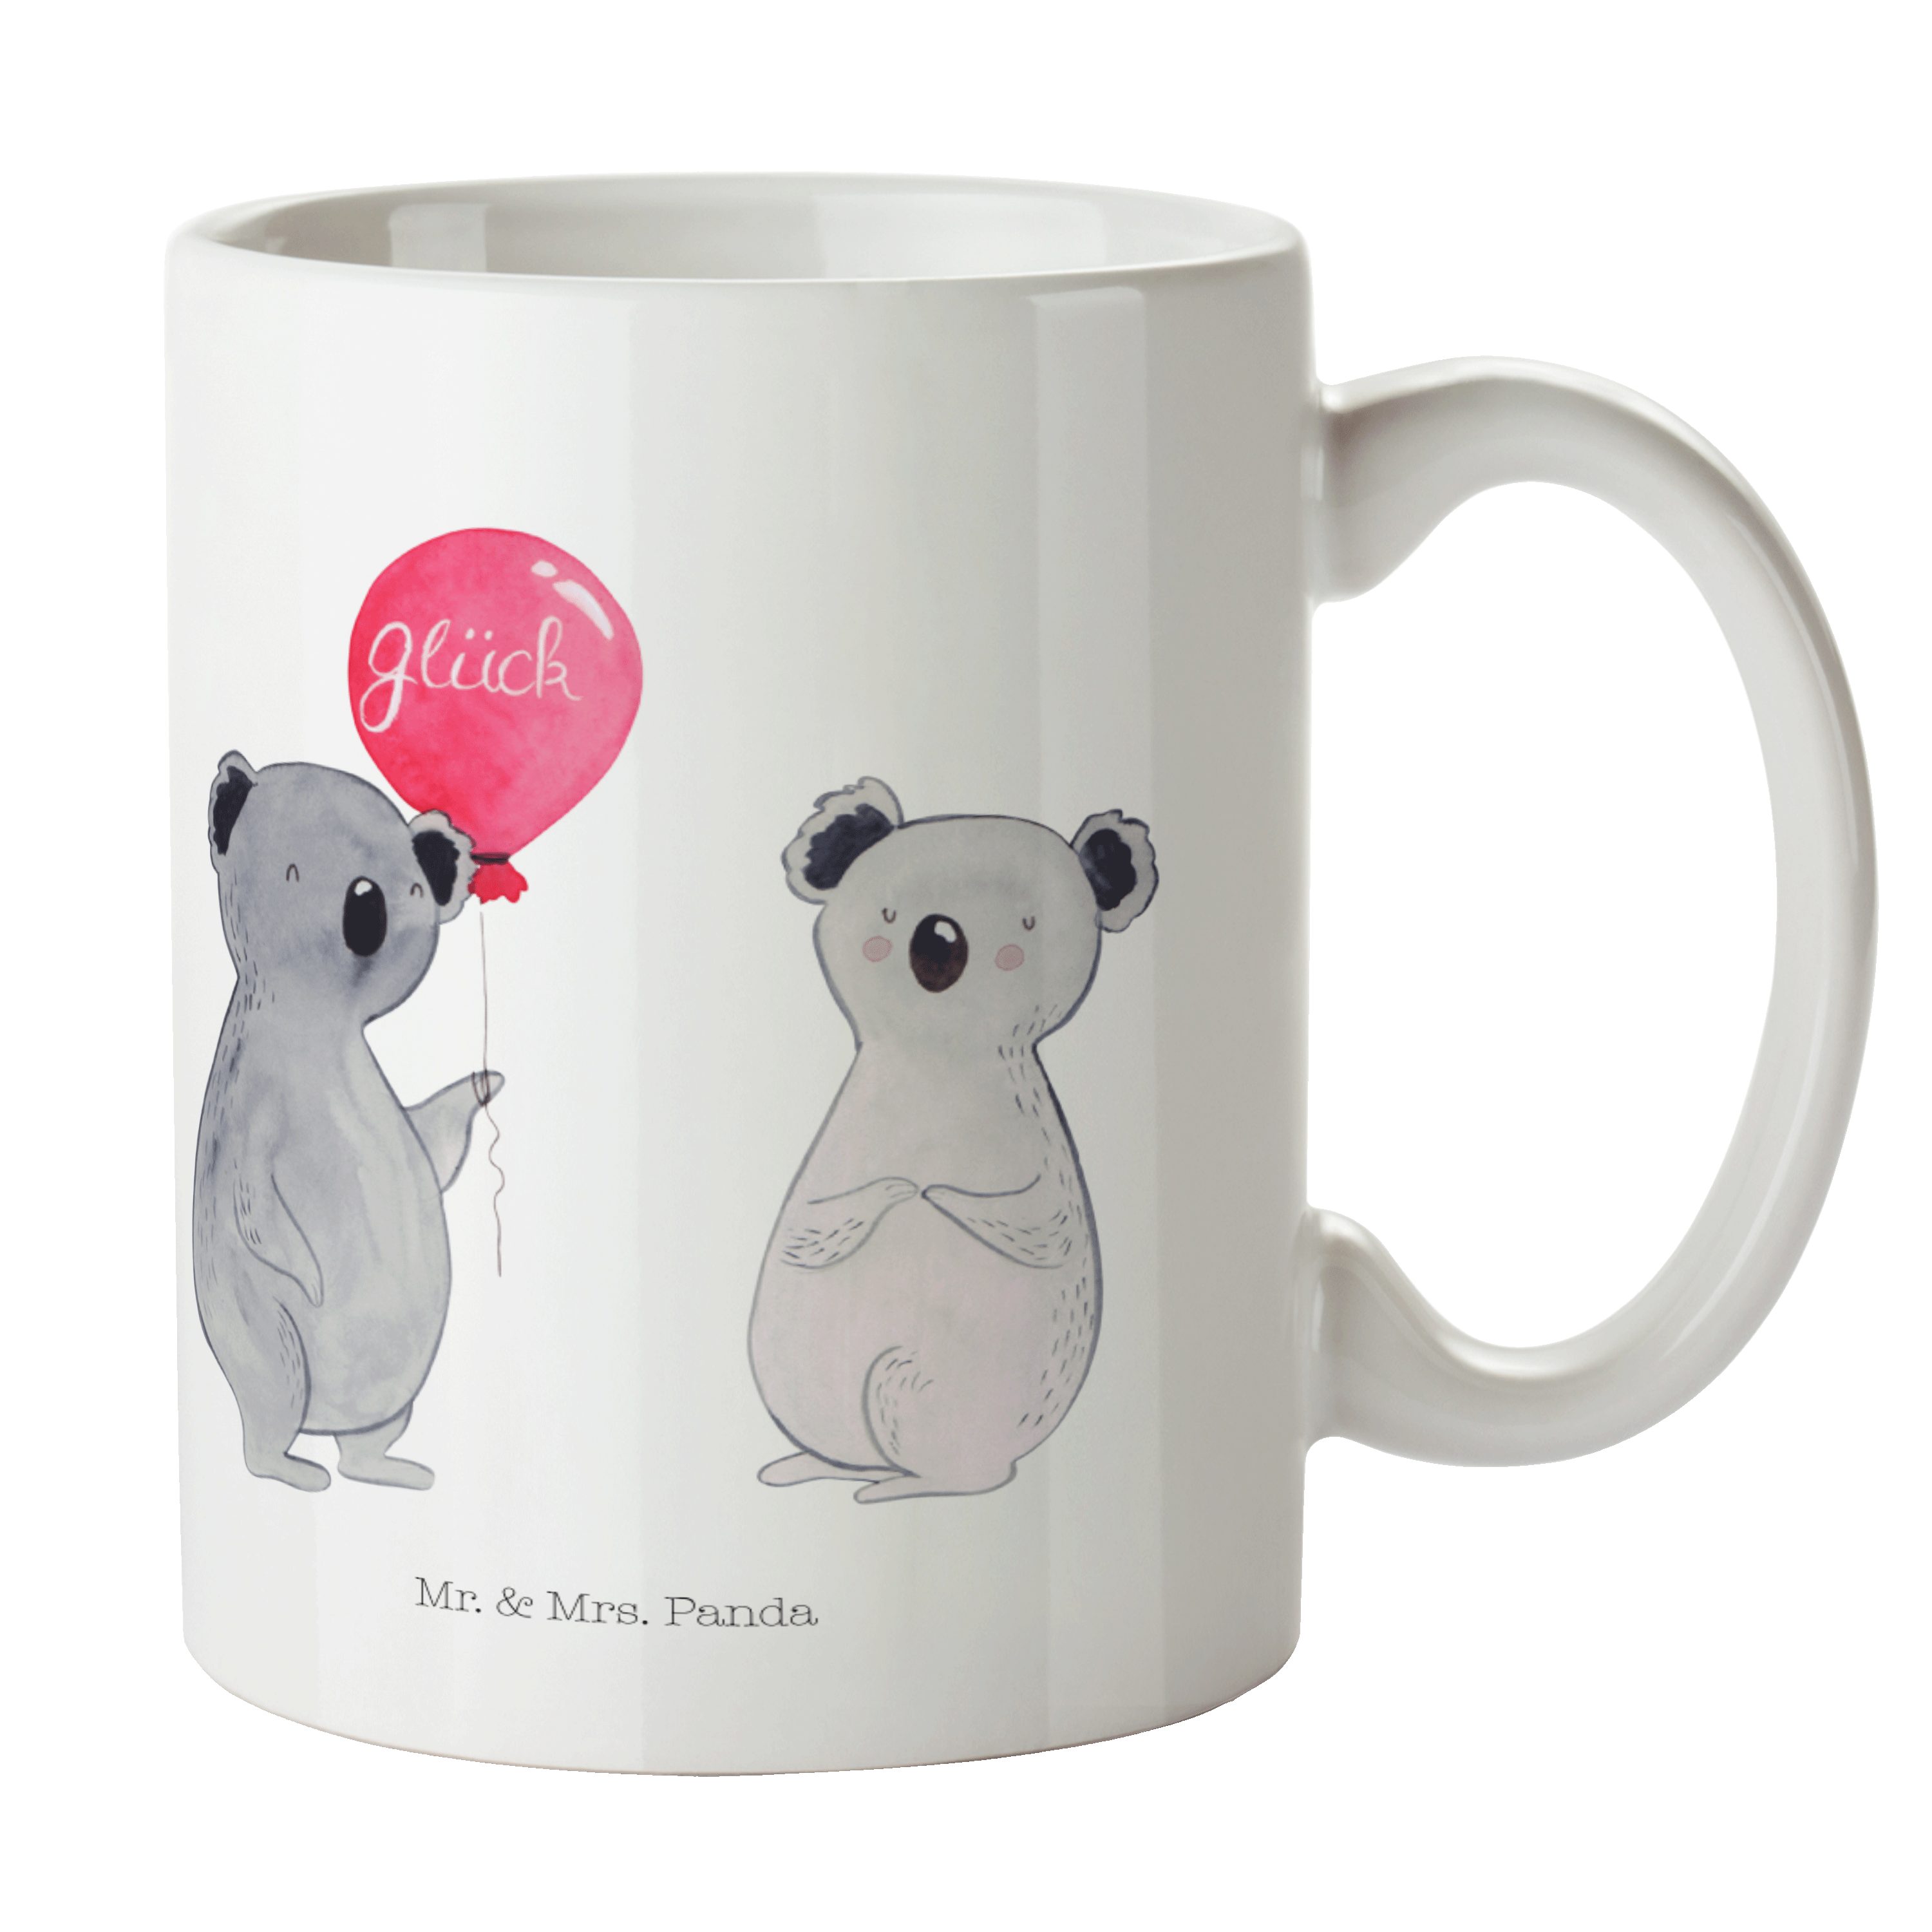 Mr. & Mrs. Panda Tasse Koala Luftballon - Weiß - Geschenk, Party, Tasse, Büro Tasse, Keramik, Keramik